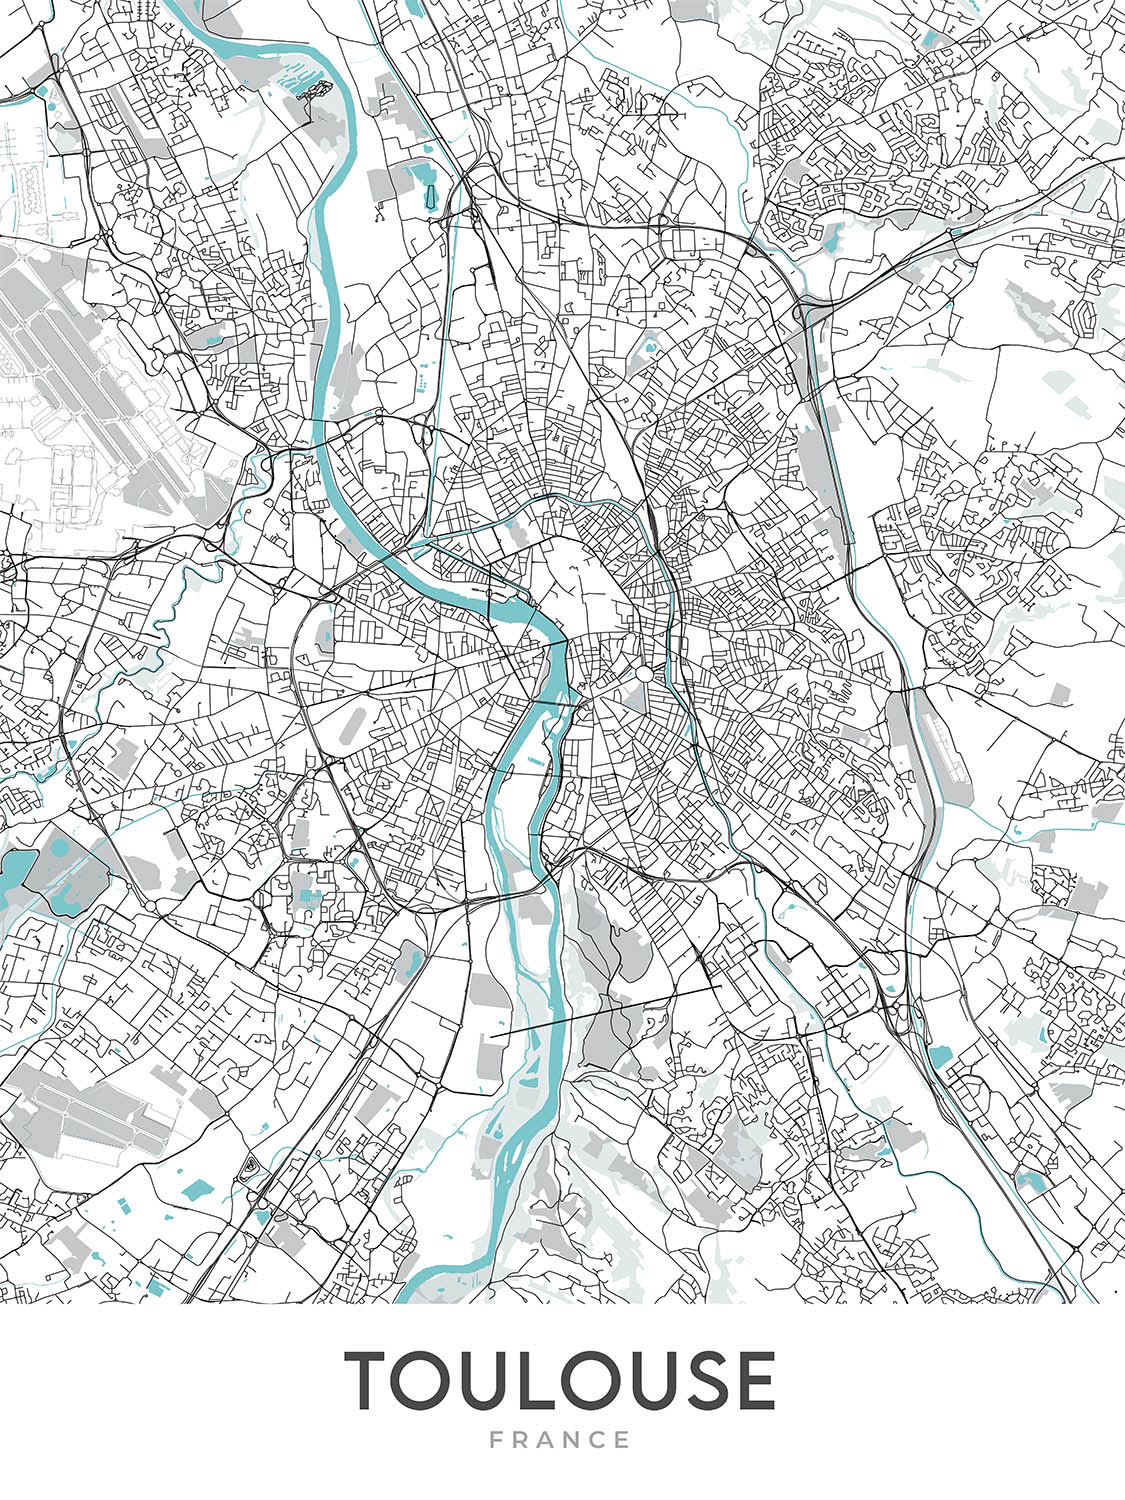 Modern City Map of Toulouse, France: Saint-Sernin, Pont Neuf, Place du Capitole, Canal du Midi, Garonne River